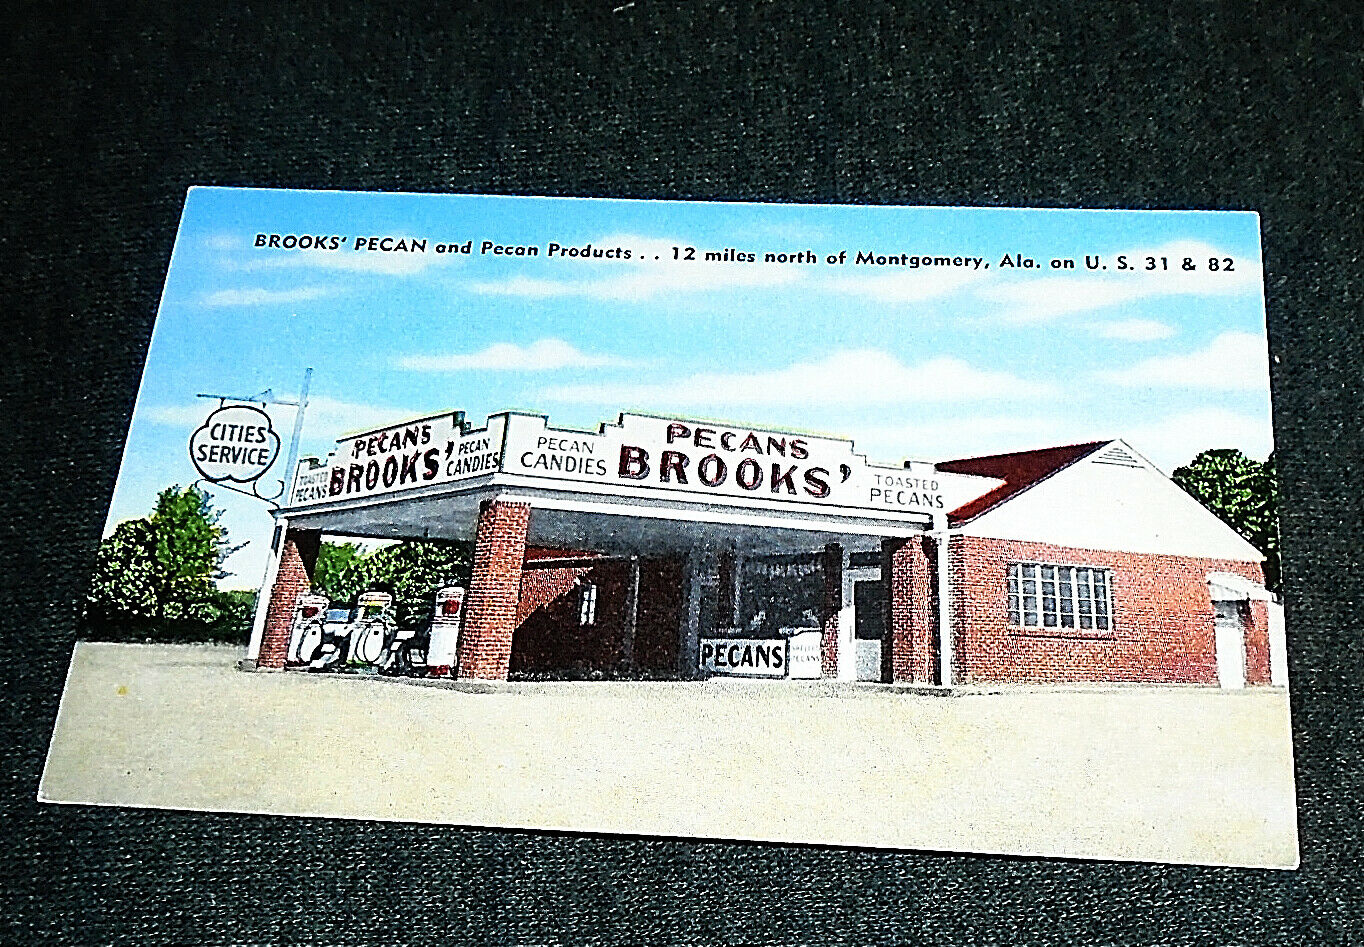 Cities Service Gas Station & Brooks Pecan Shop, Montgomery, Alabama Postcard